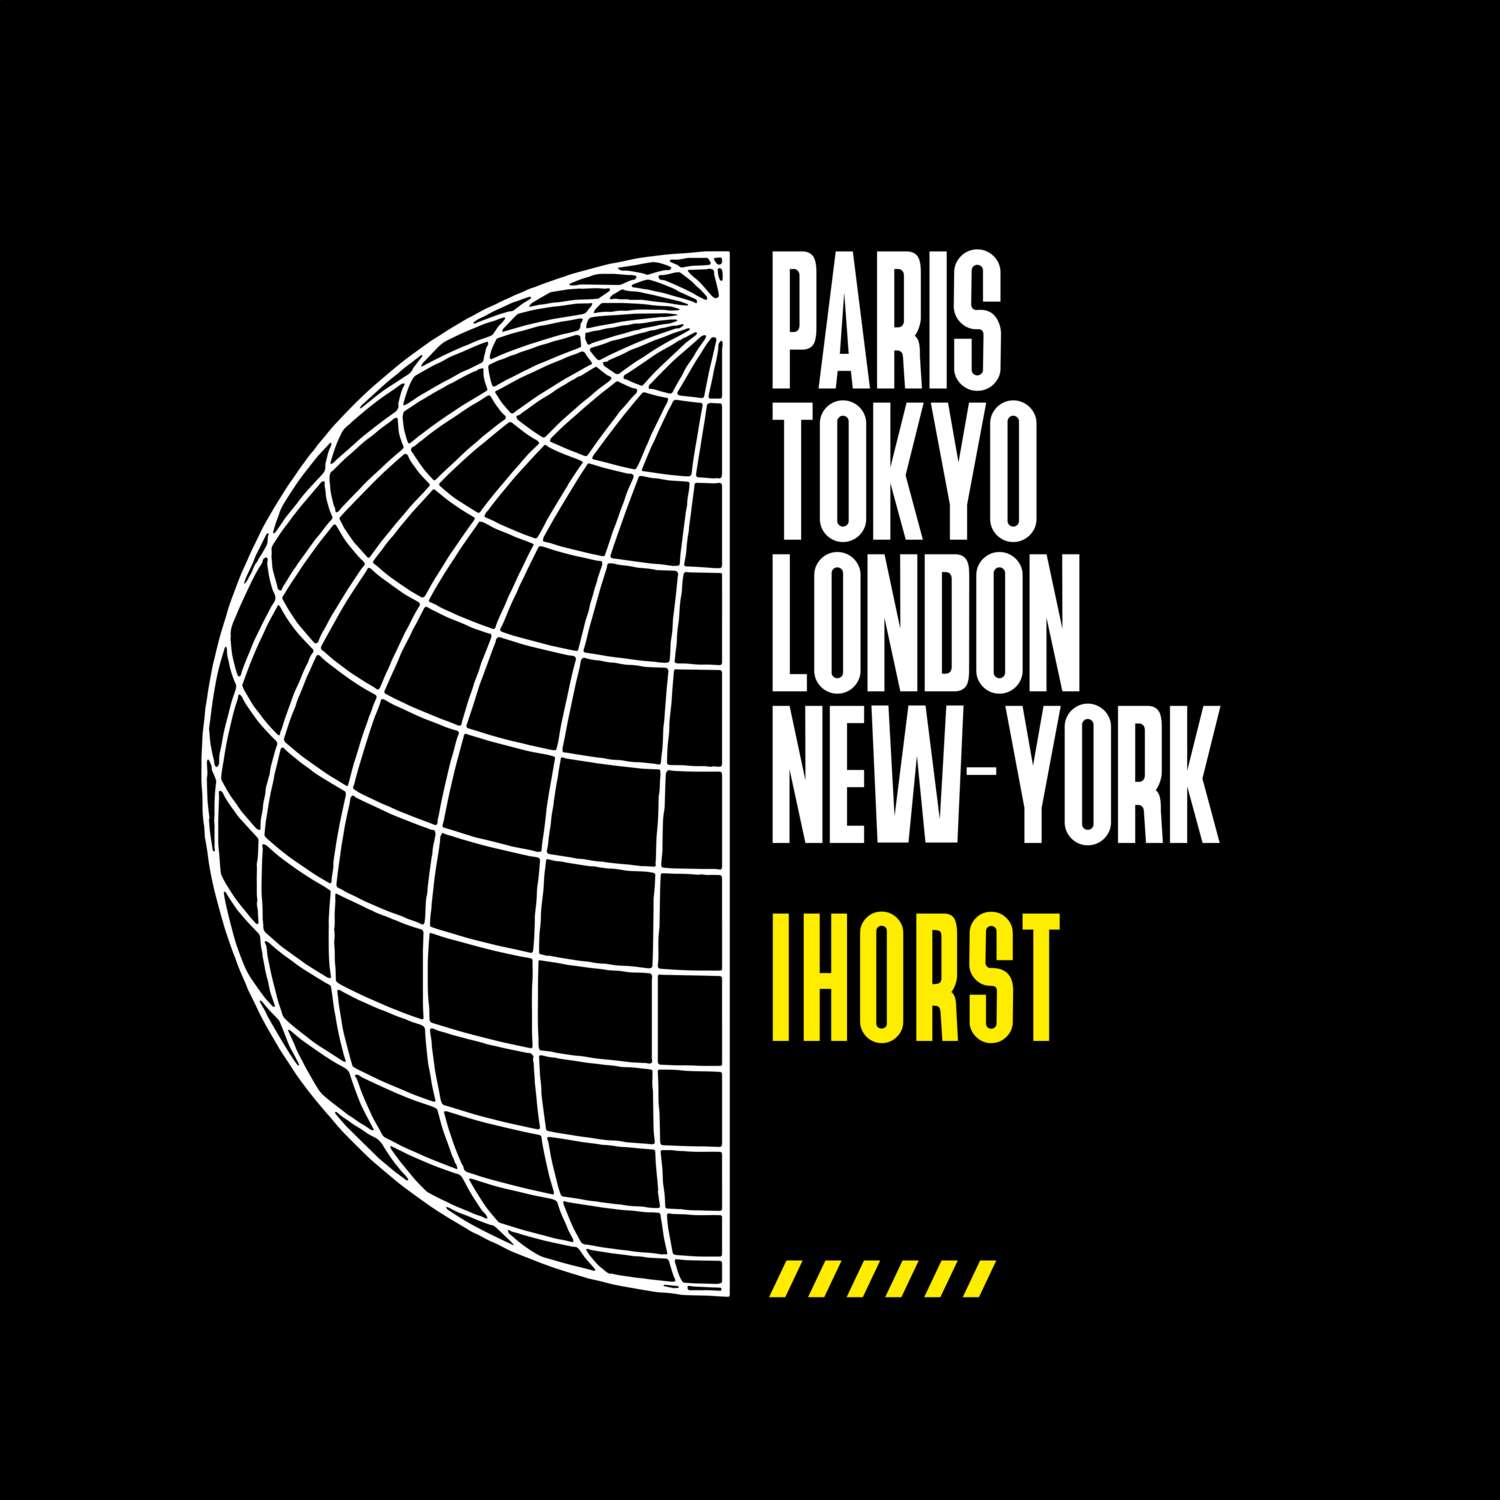 Ihorst T-Shirt »Paris Tokyo London«